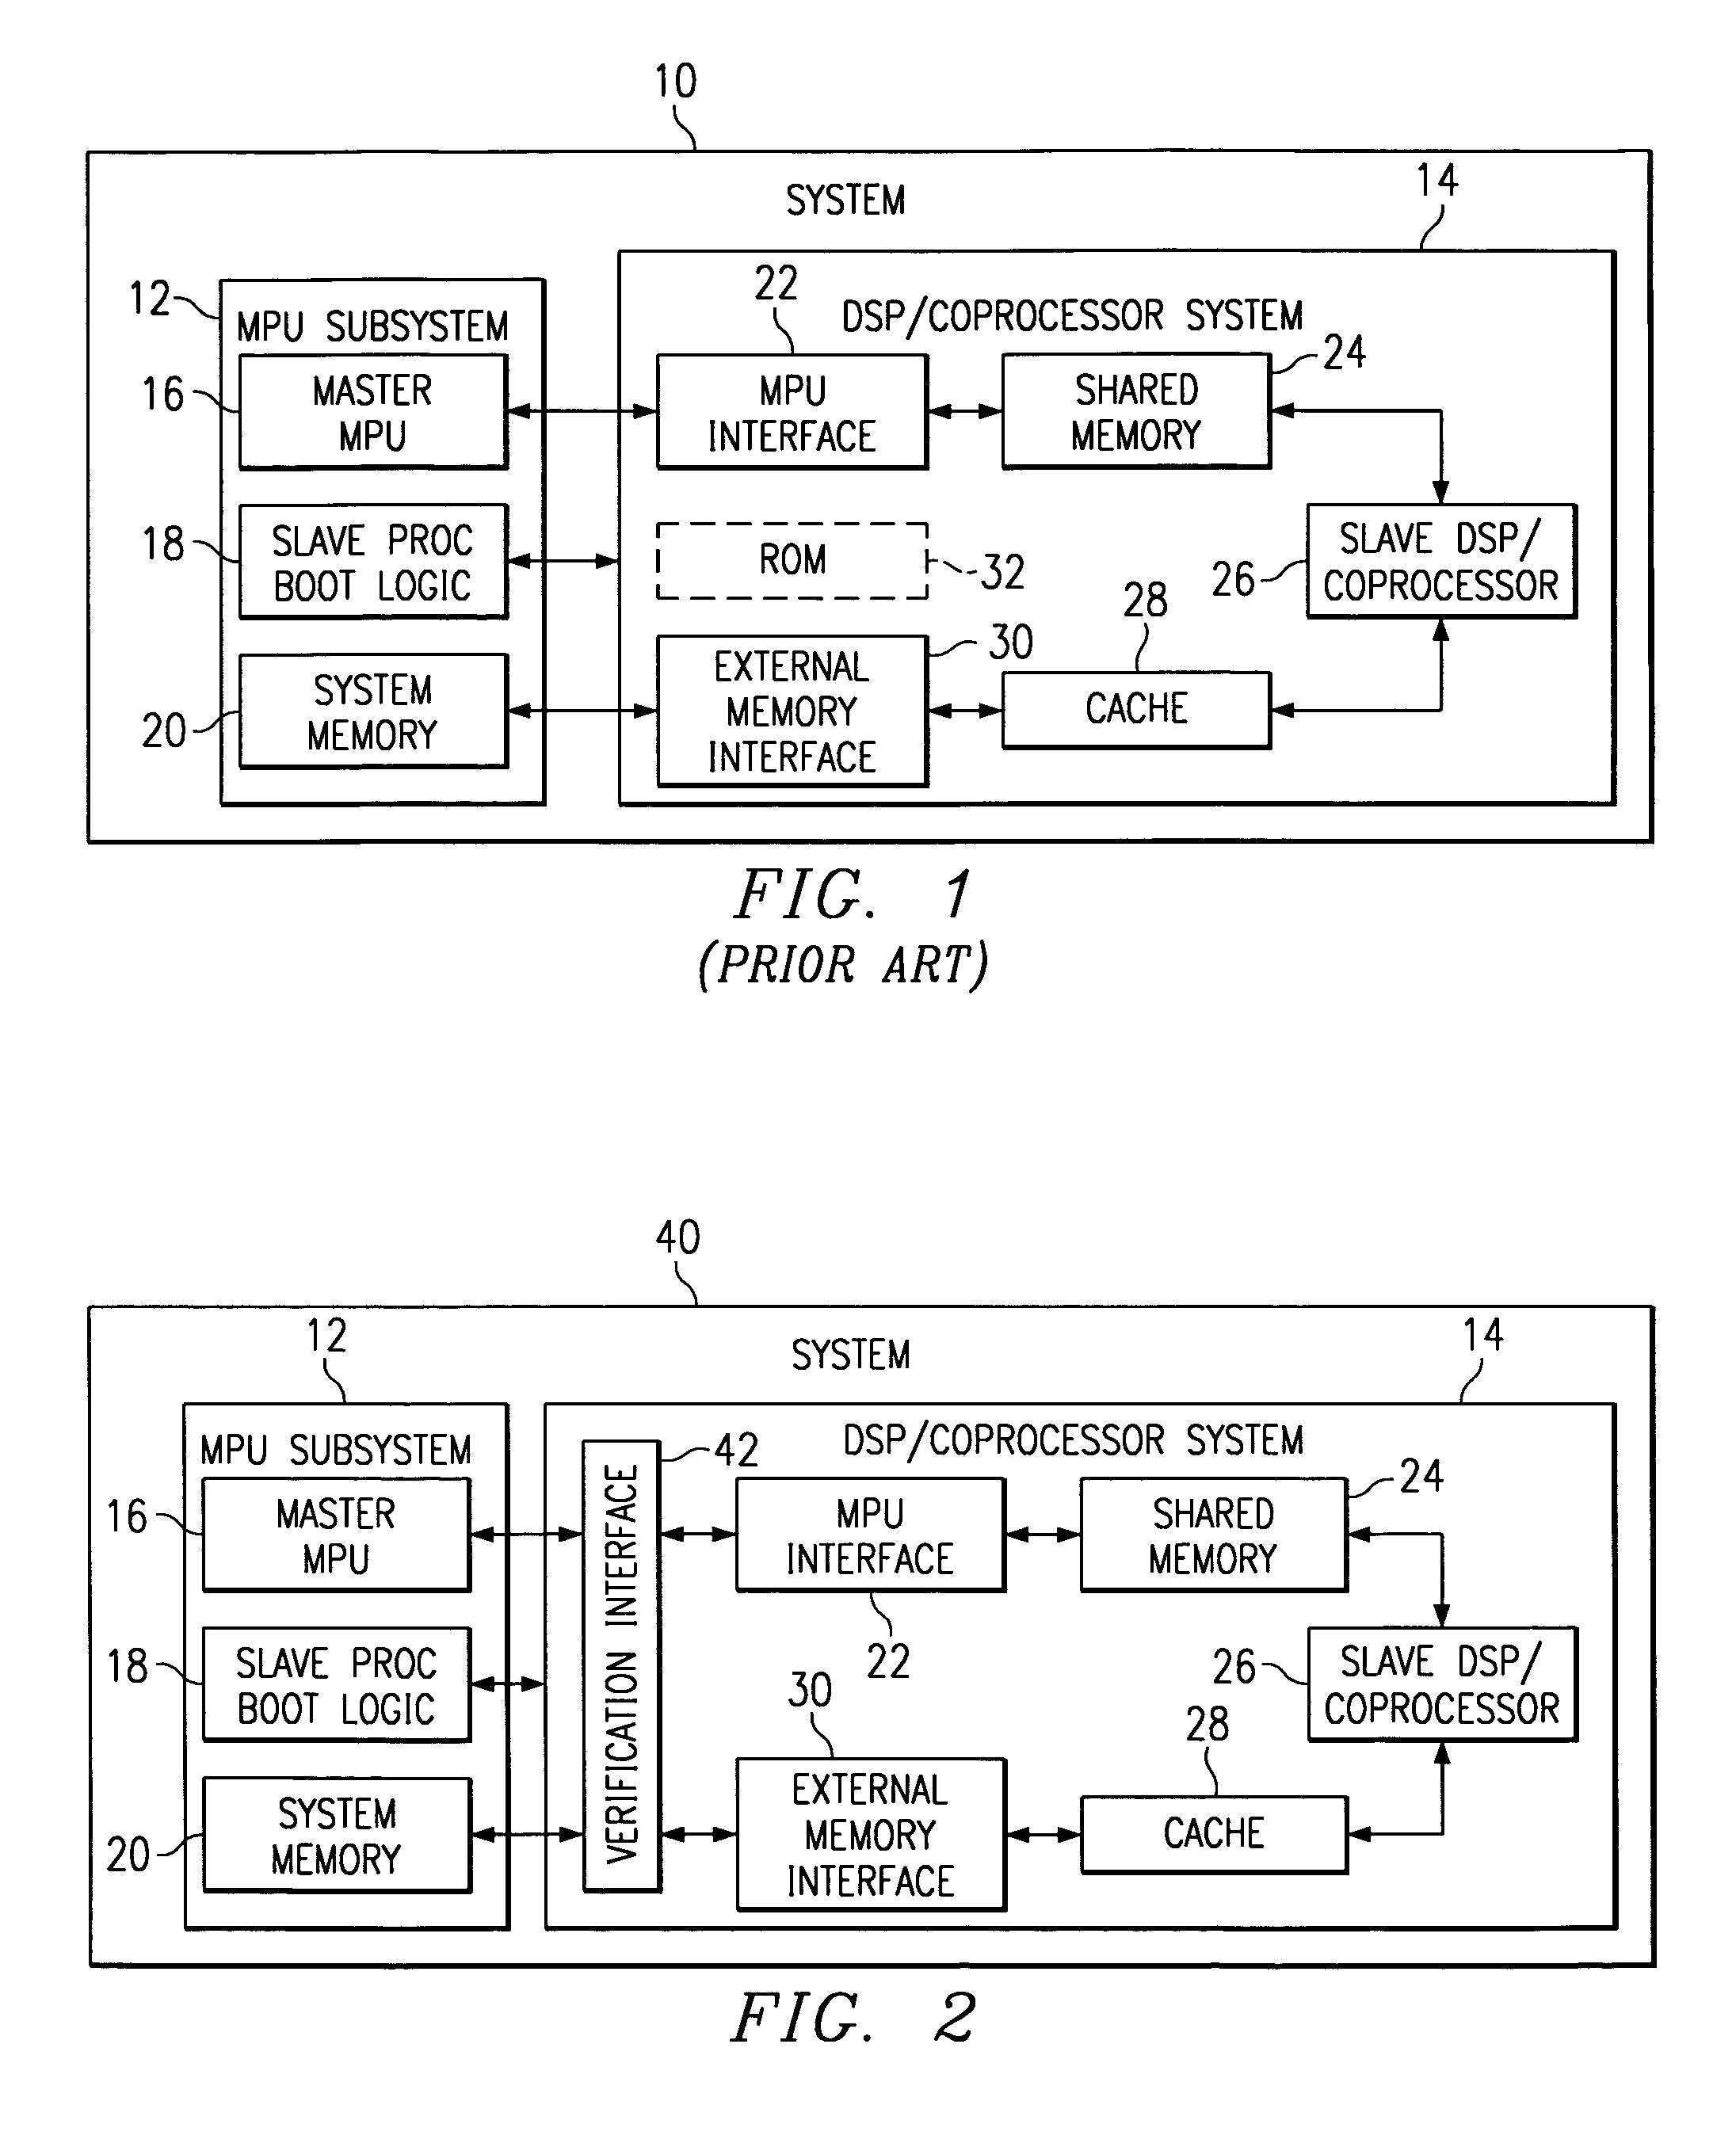 Multi-processor system verification circuitry